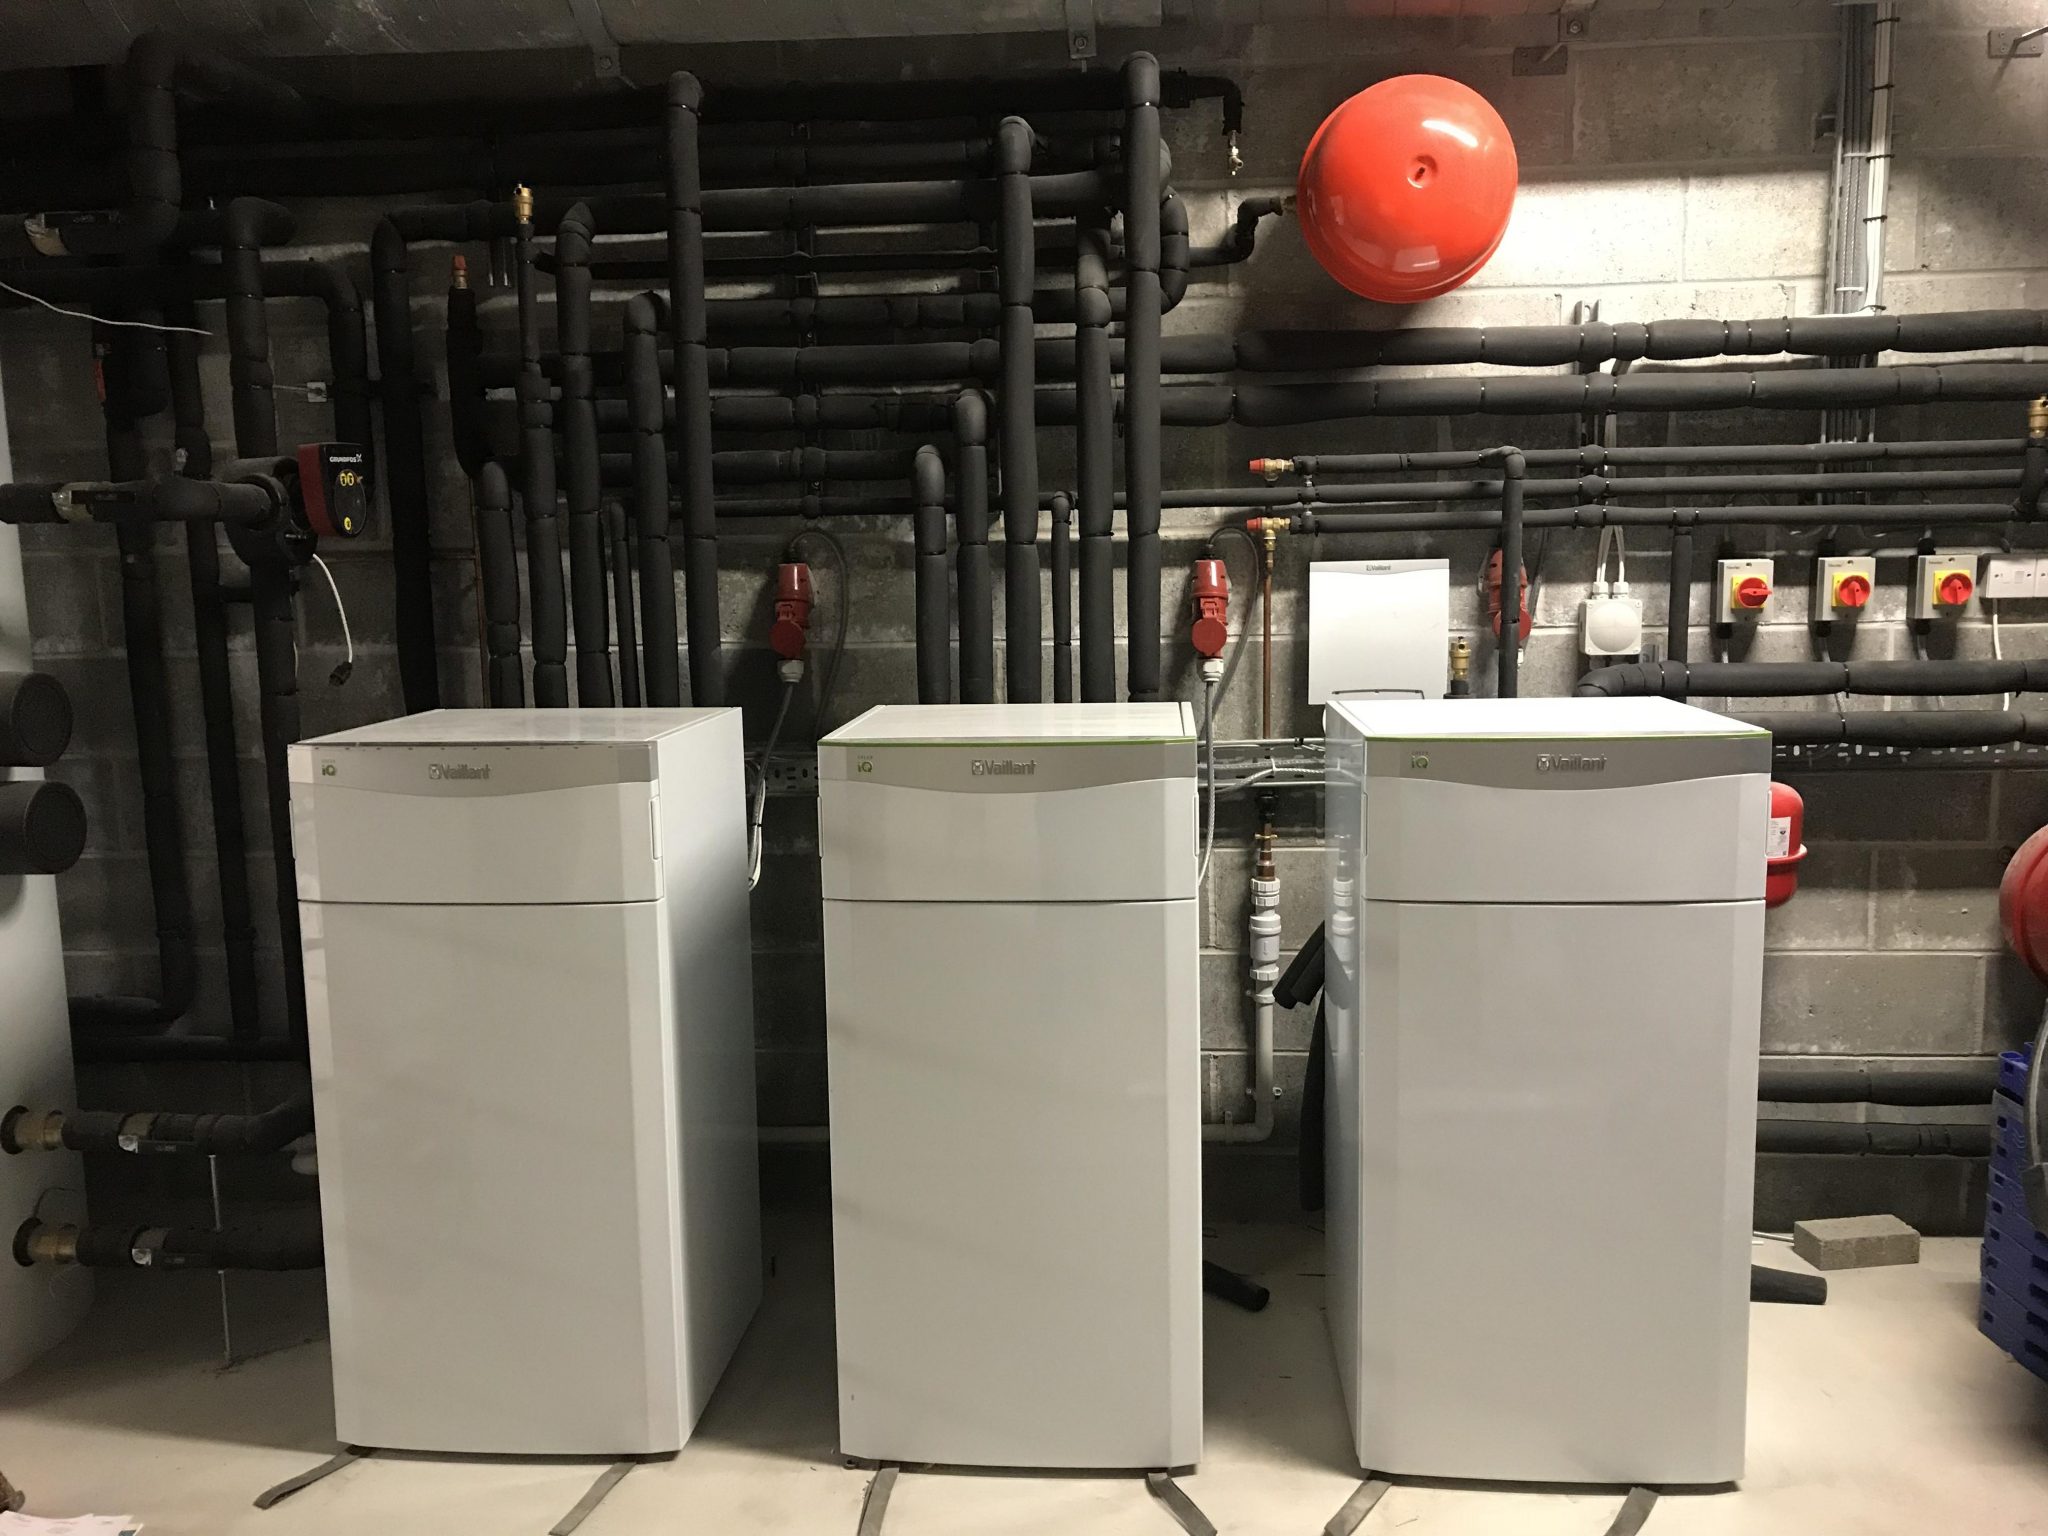 Vaillant Ground Source Heat Pumps installed by Simon Annear